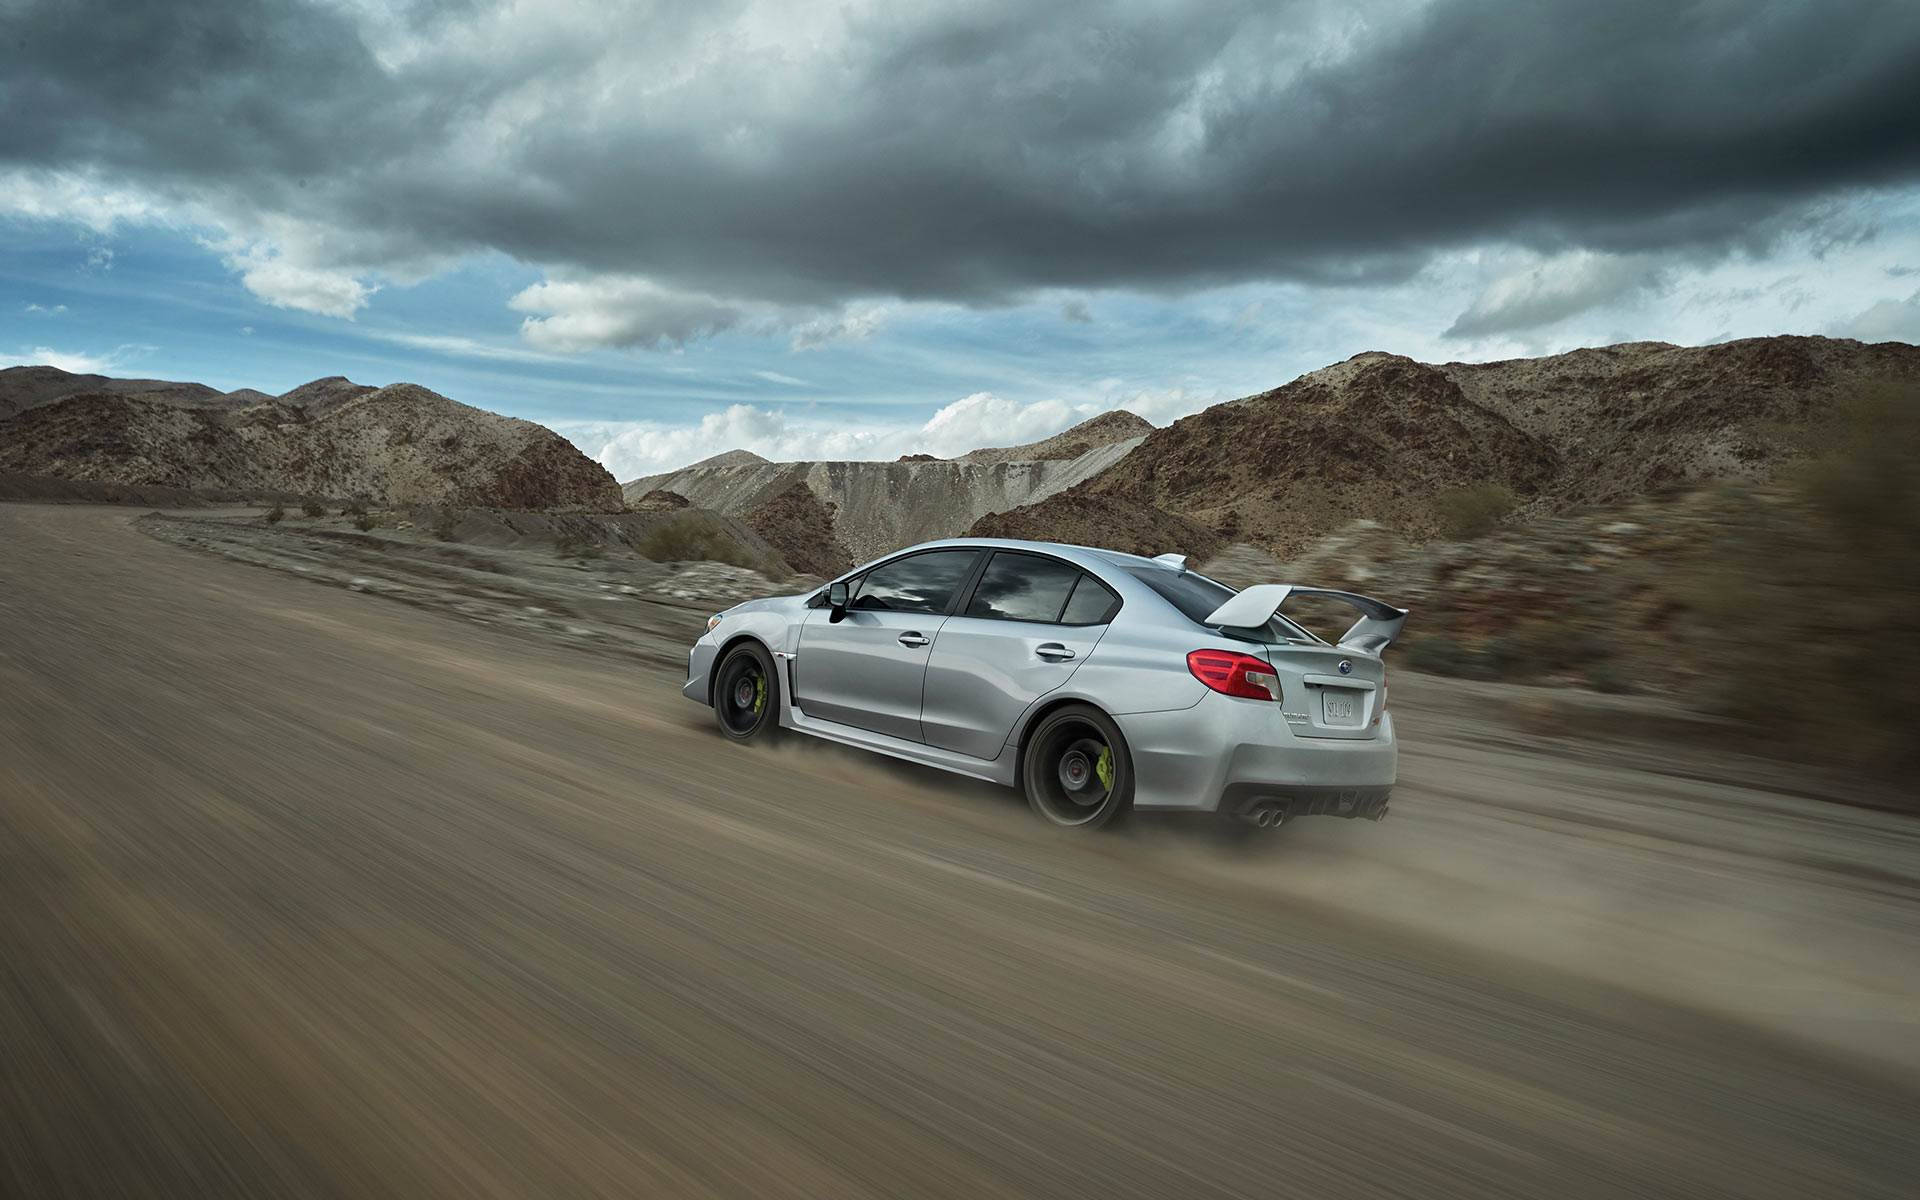 Subaru Impreza High Speed Photograph Background